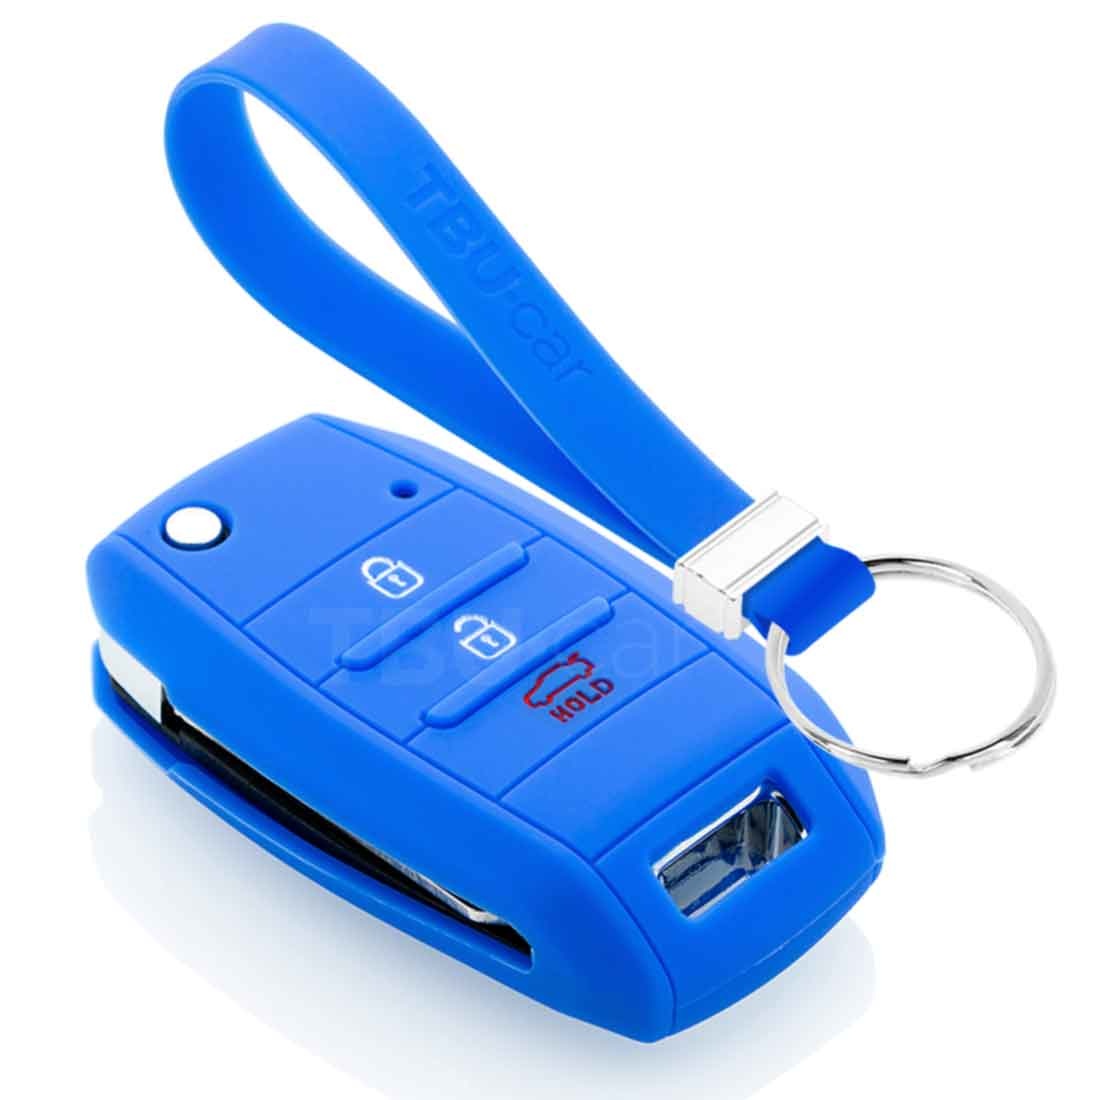 TBU car TBU car Autoschlüssel Hülle kompatibel mit Kia 3 Tasten - Schutzhülle aus Silikon - Auto Schlüsselhülle Cover in Blau